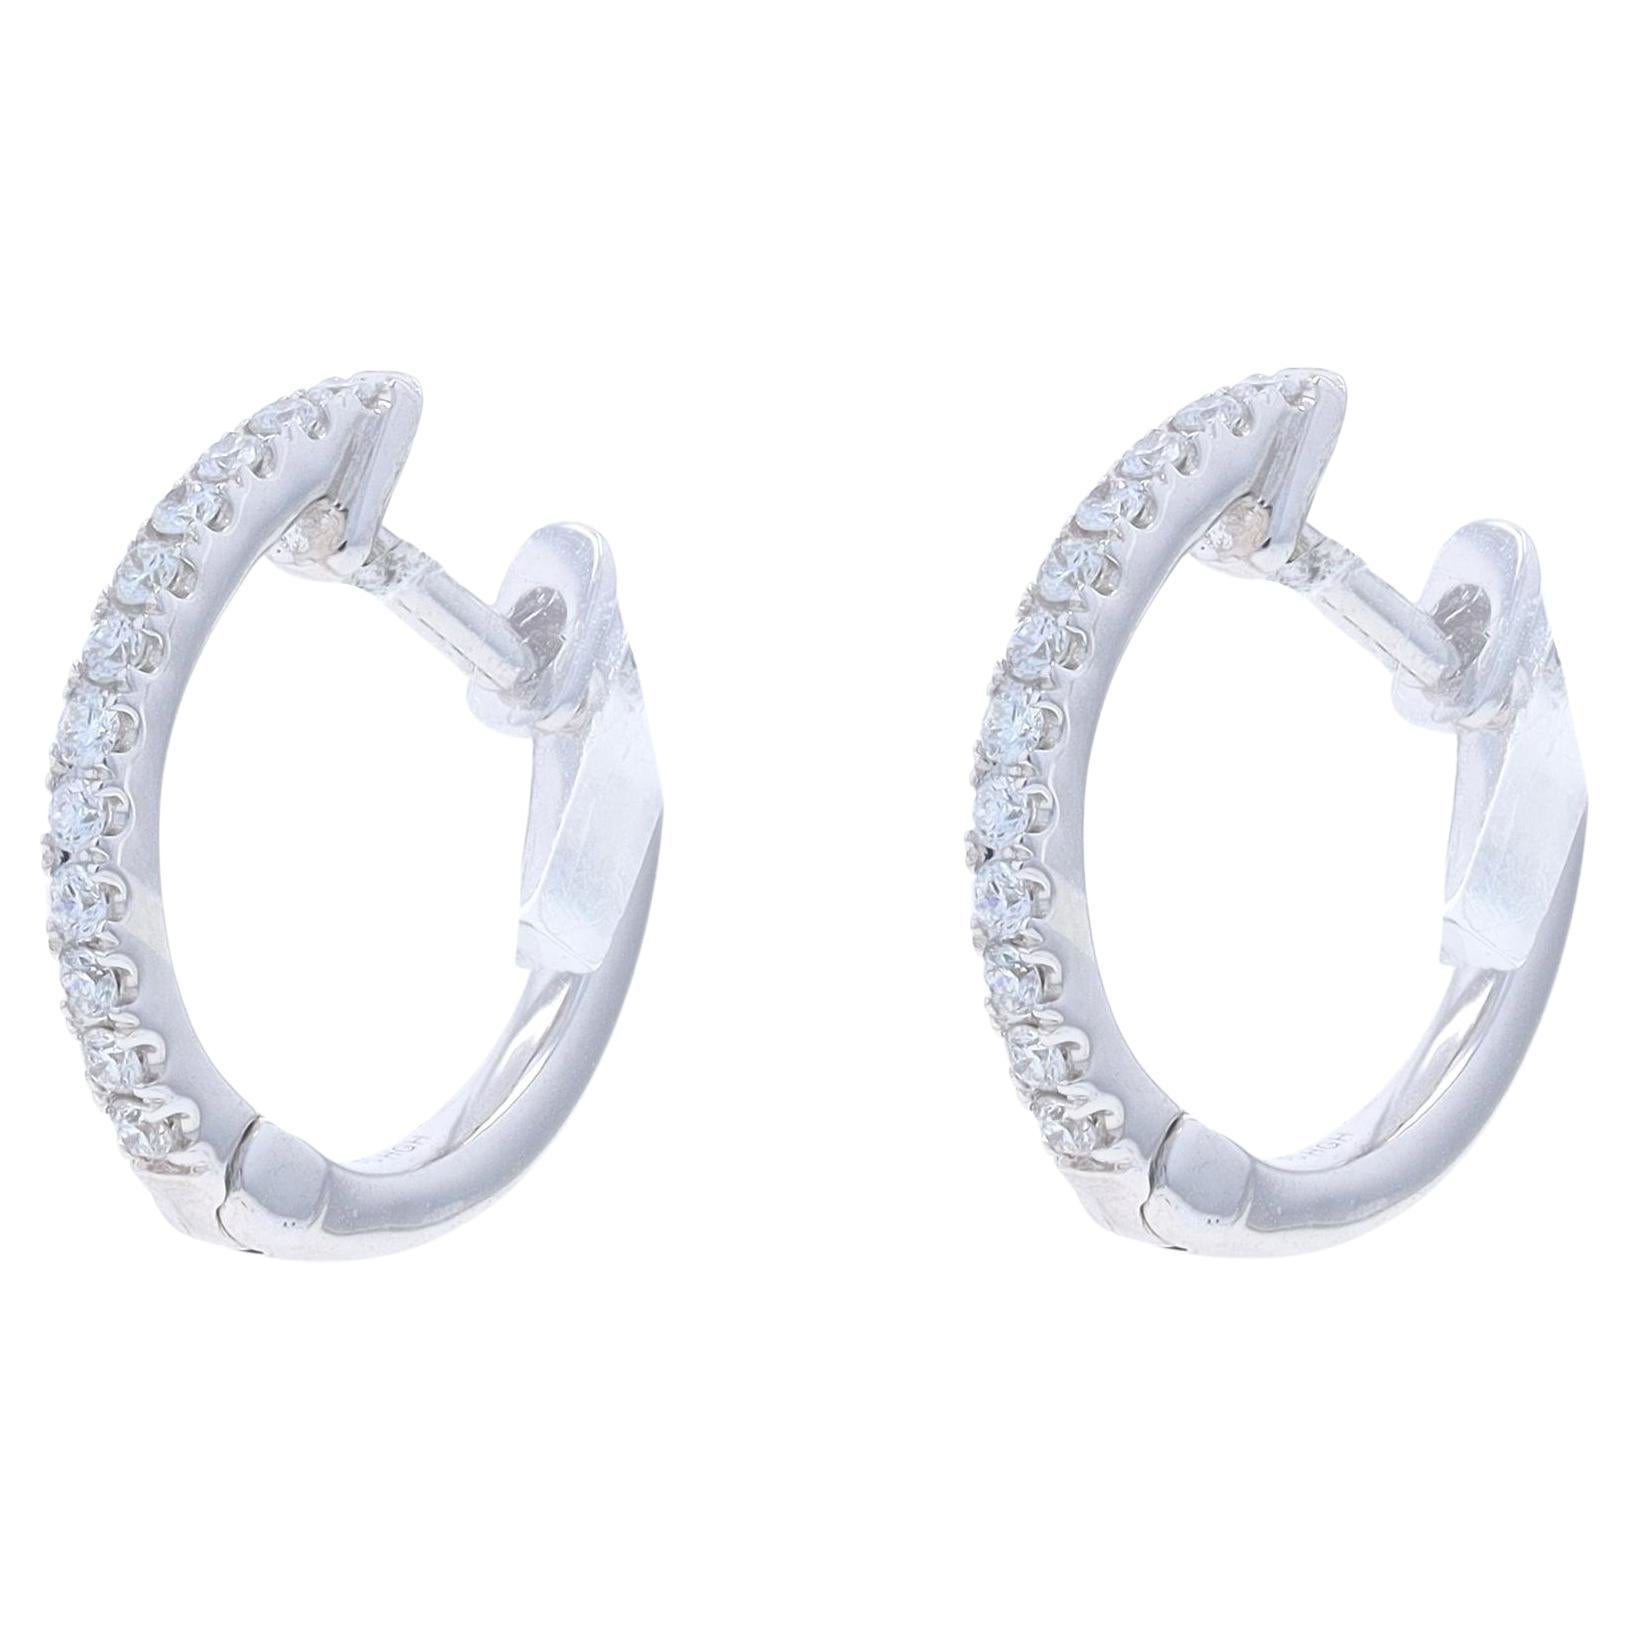 White Gold Diamond Huggie Hoop Earrings - 14k Round .12ctw French Set Pierced